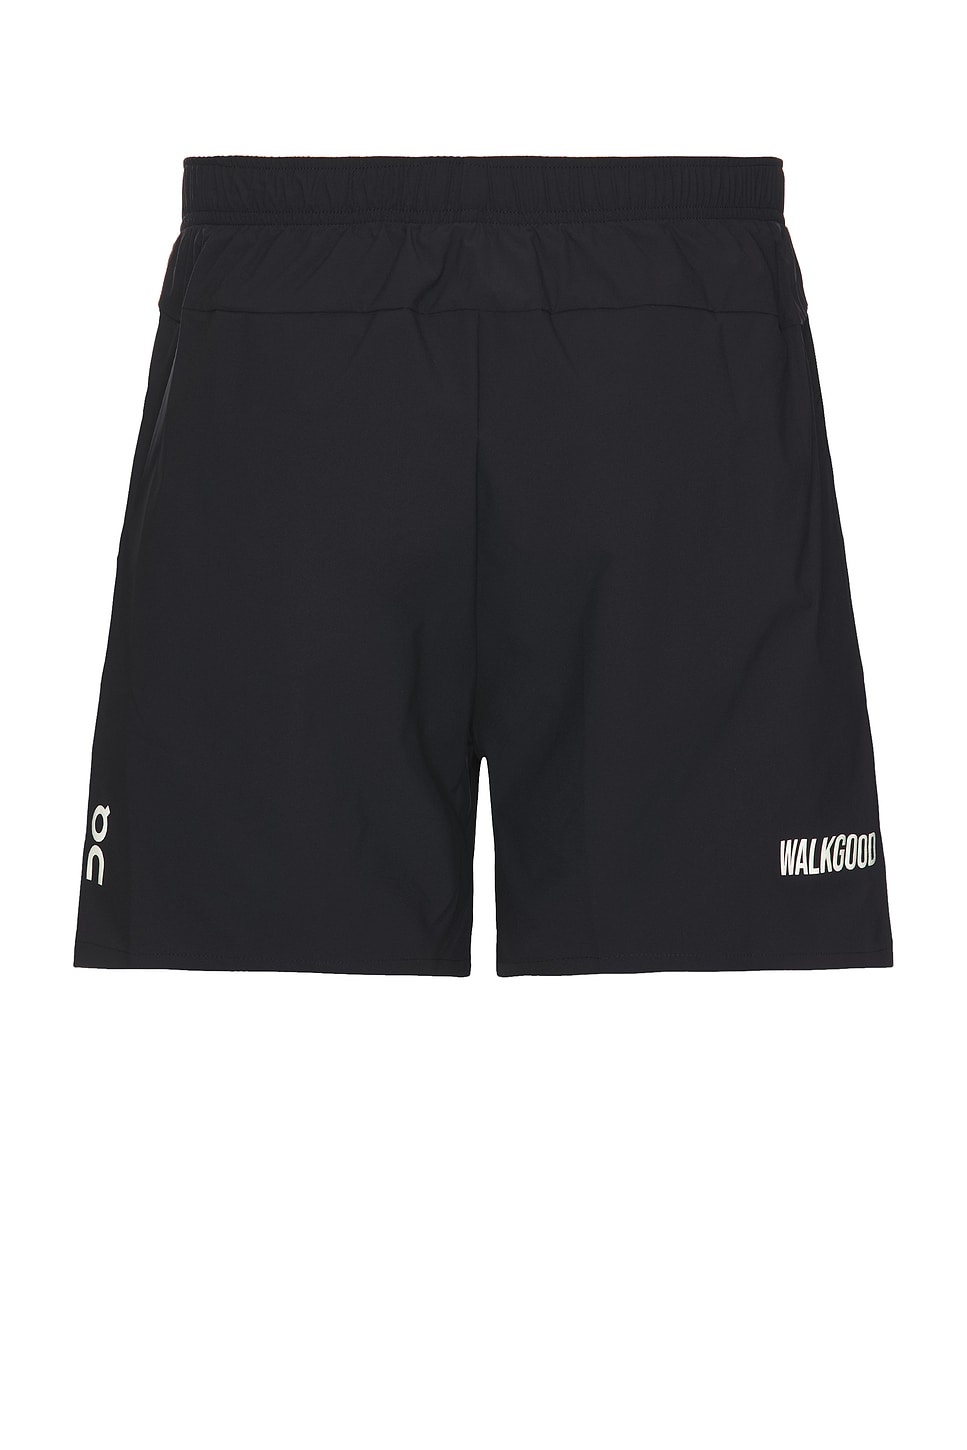 x Walkgood LA Core Shorts - 2